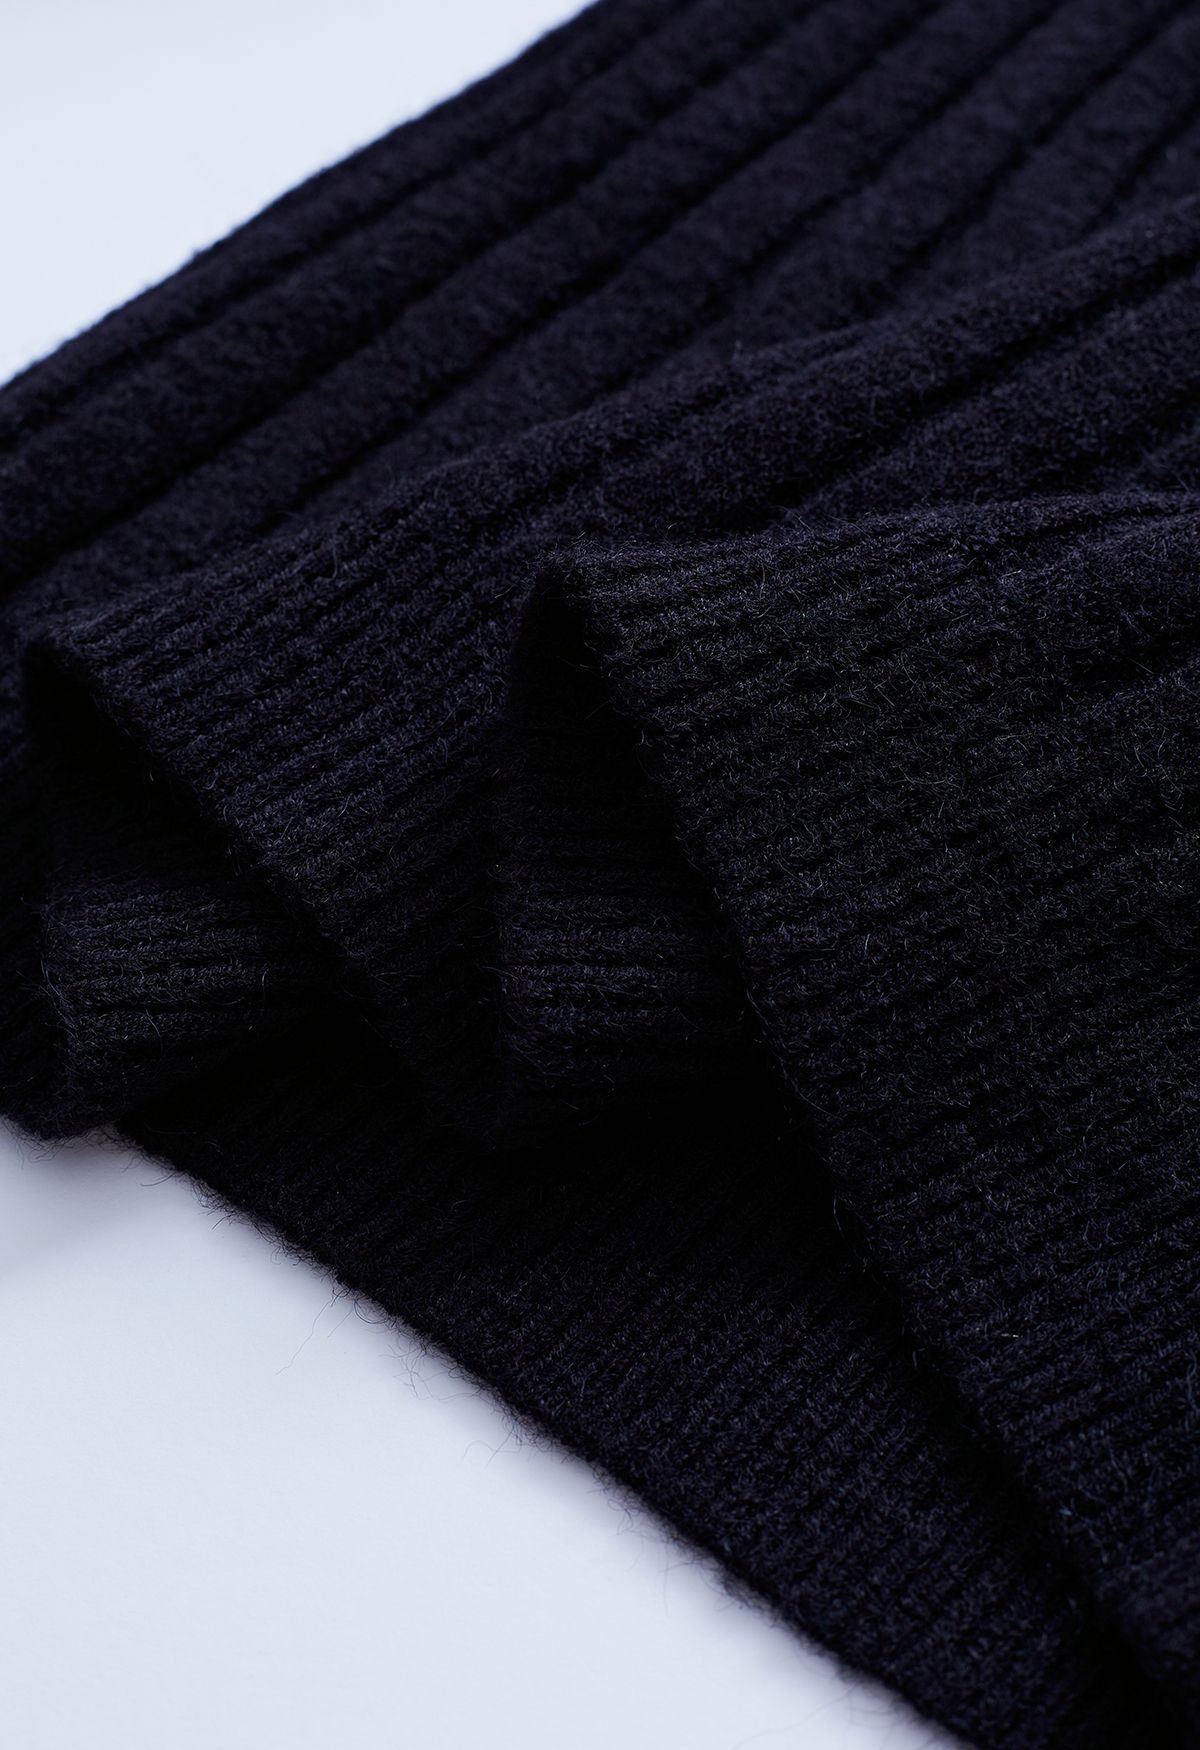 Turtleneck Sleeves Knit Sweater in Black